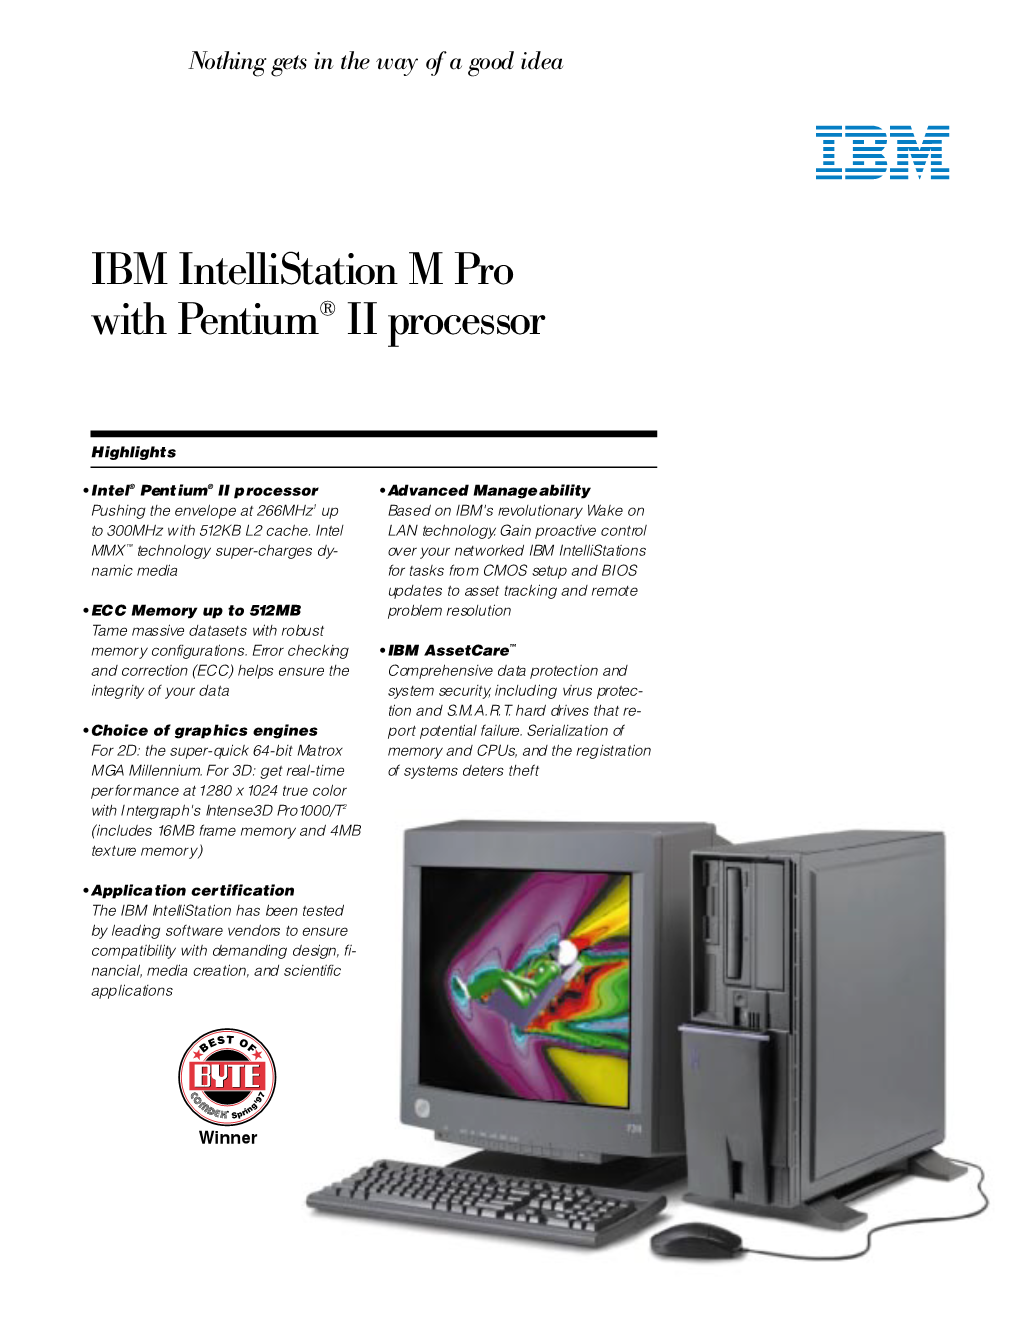 IBM Intellistation M Pro with Pentium® II Processor